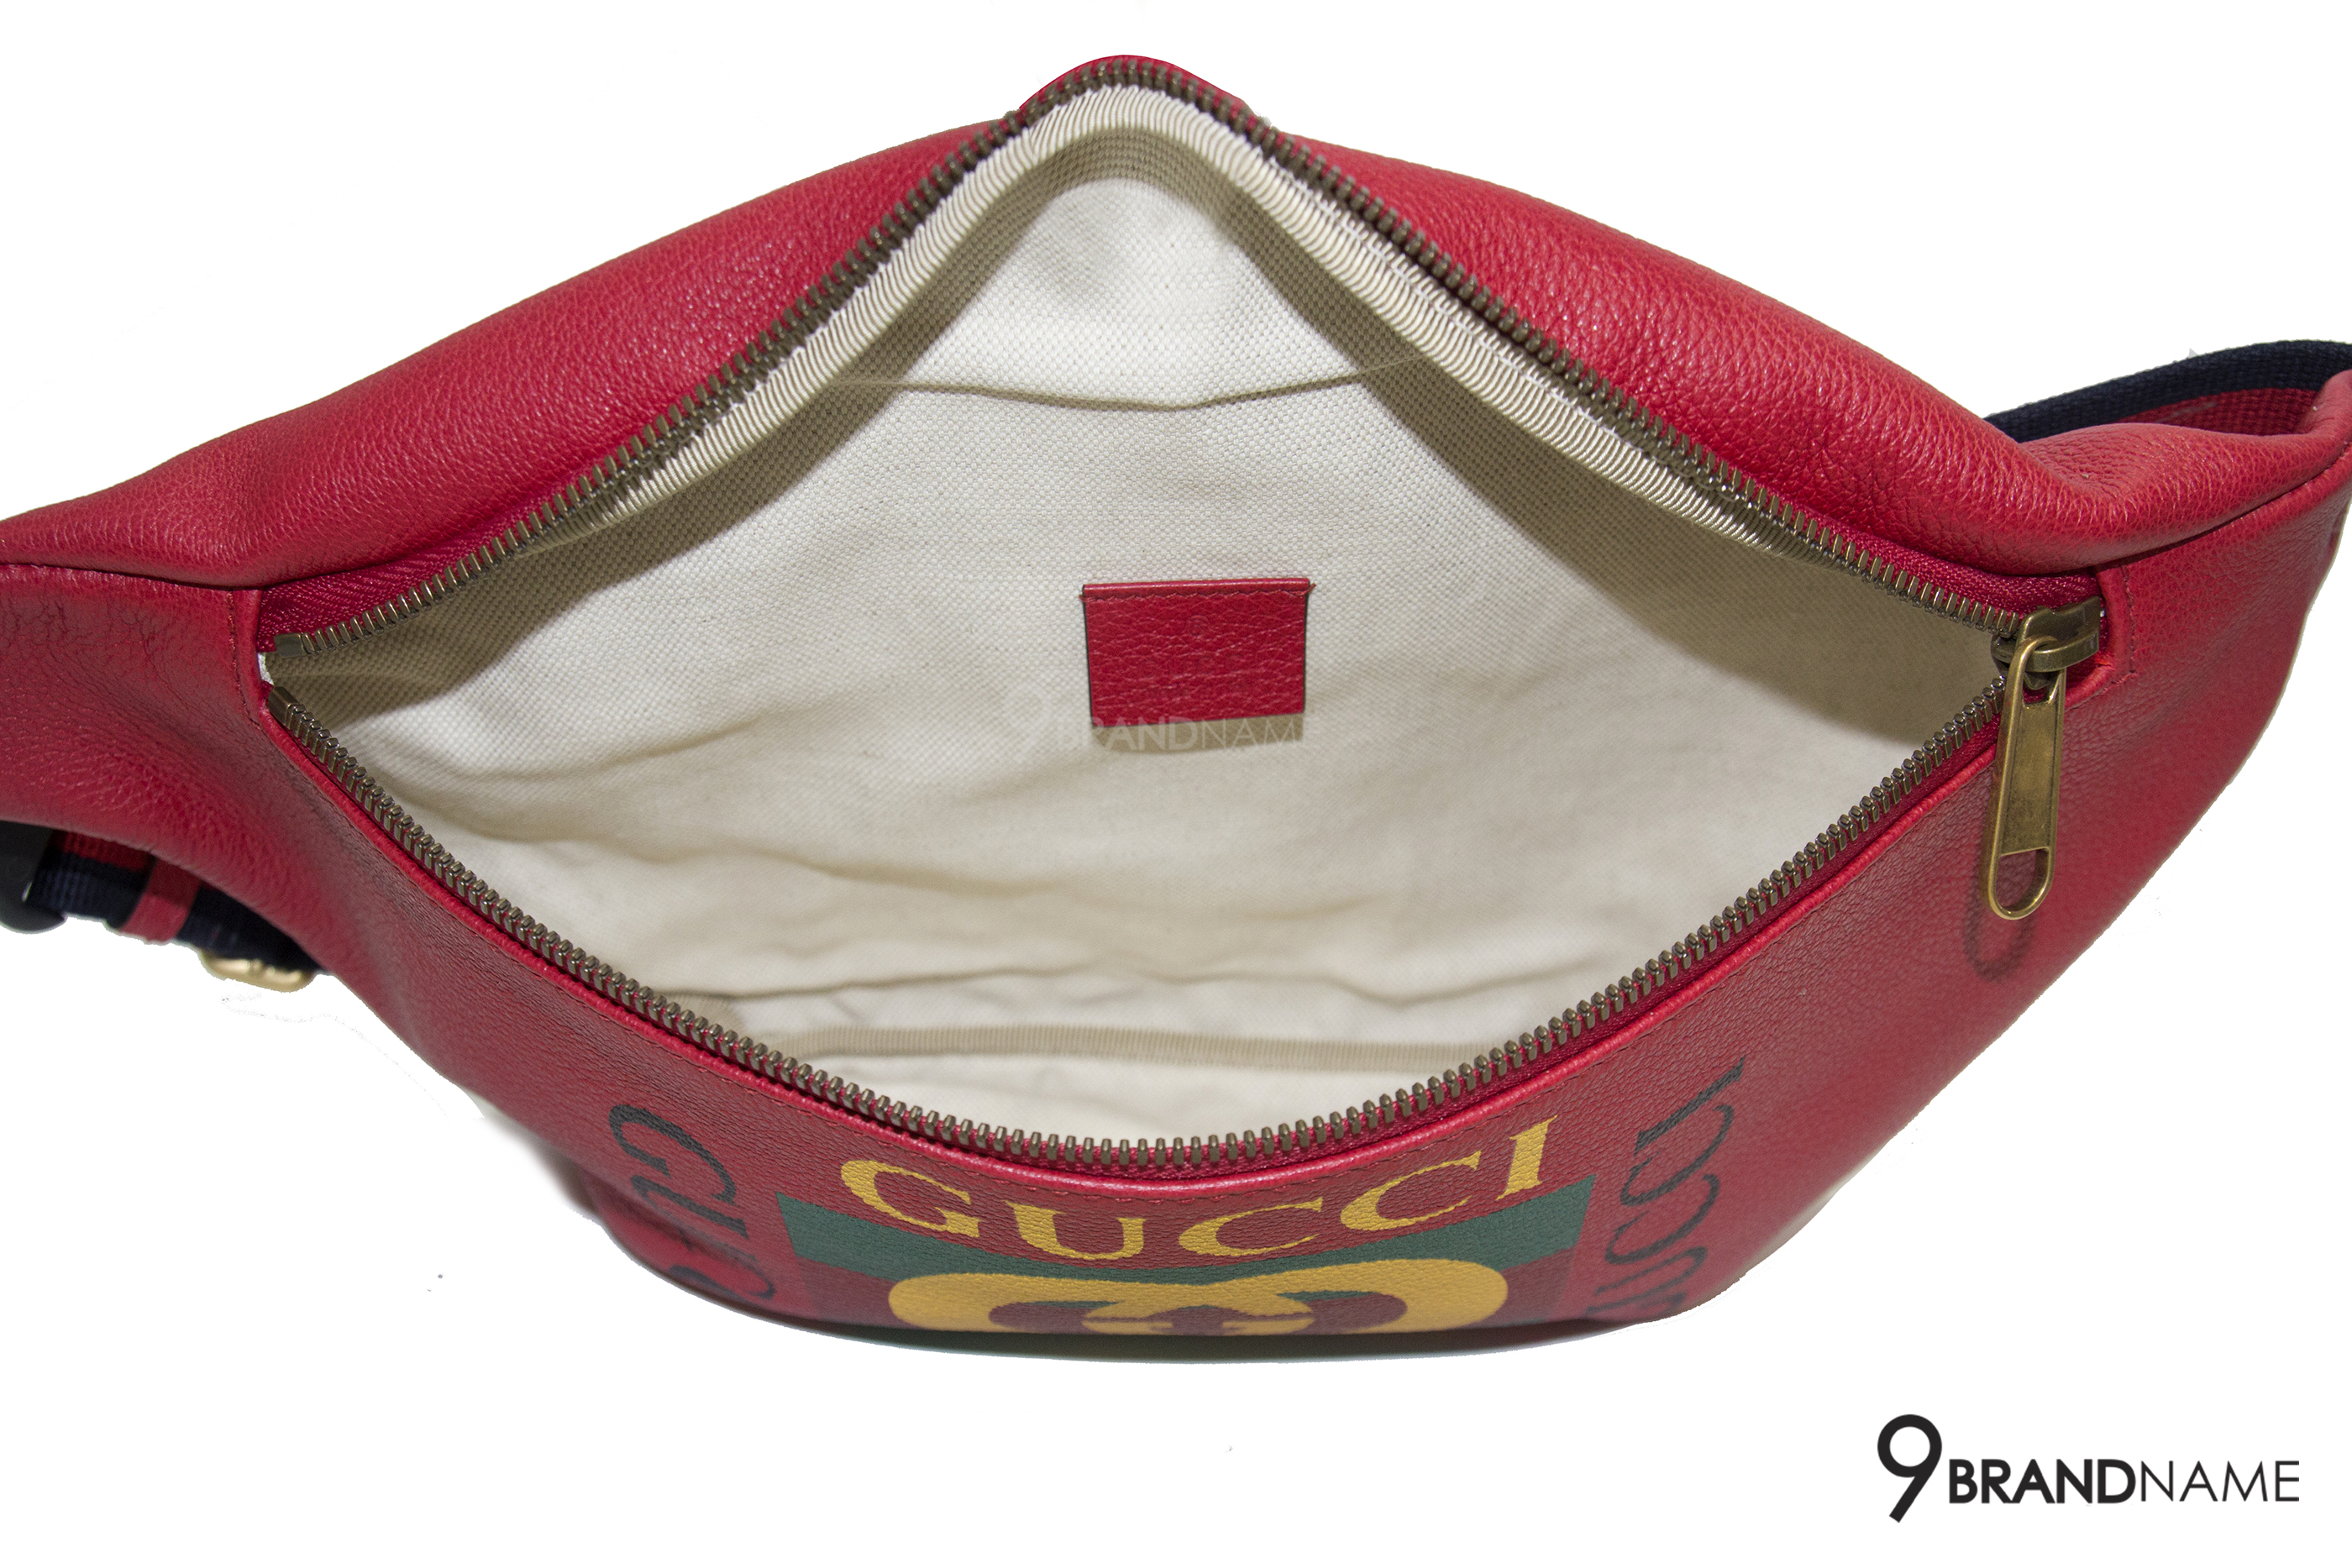 Gucci Black Print Small Belt Bag - 9brandname